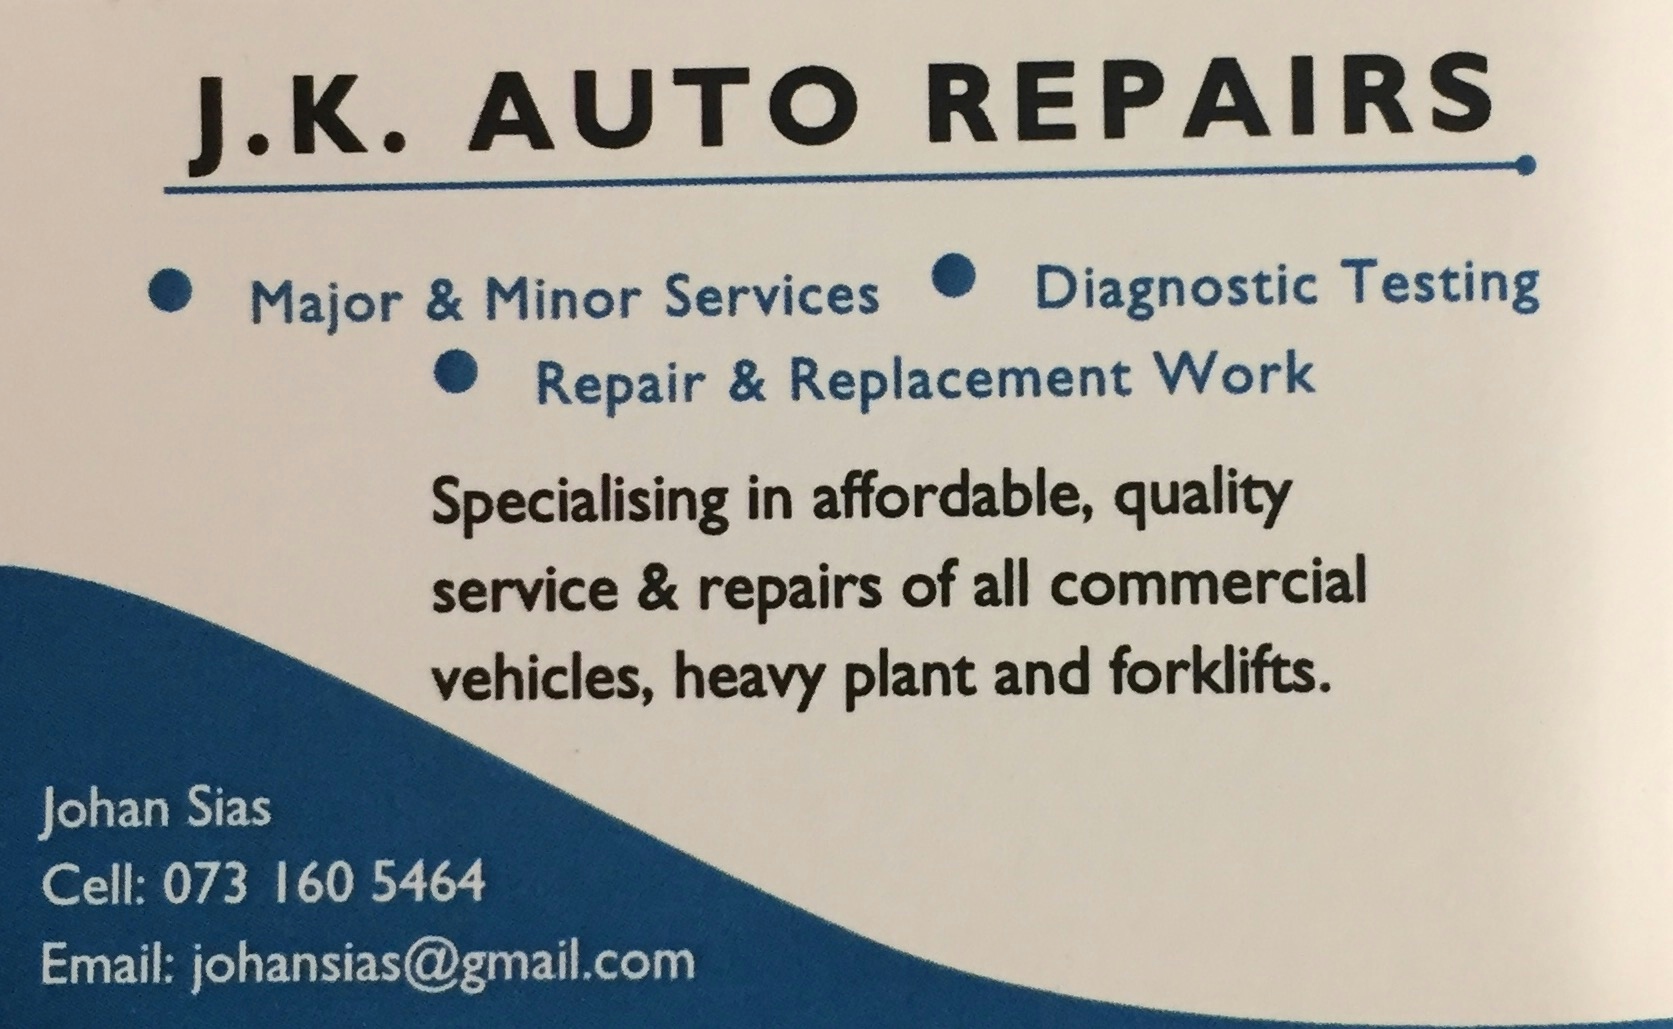 J. K. Auto Repairs